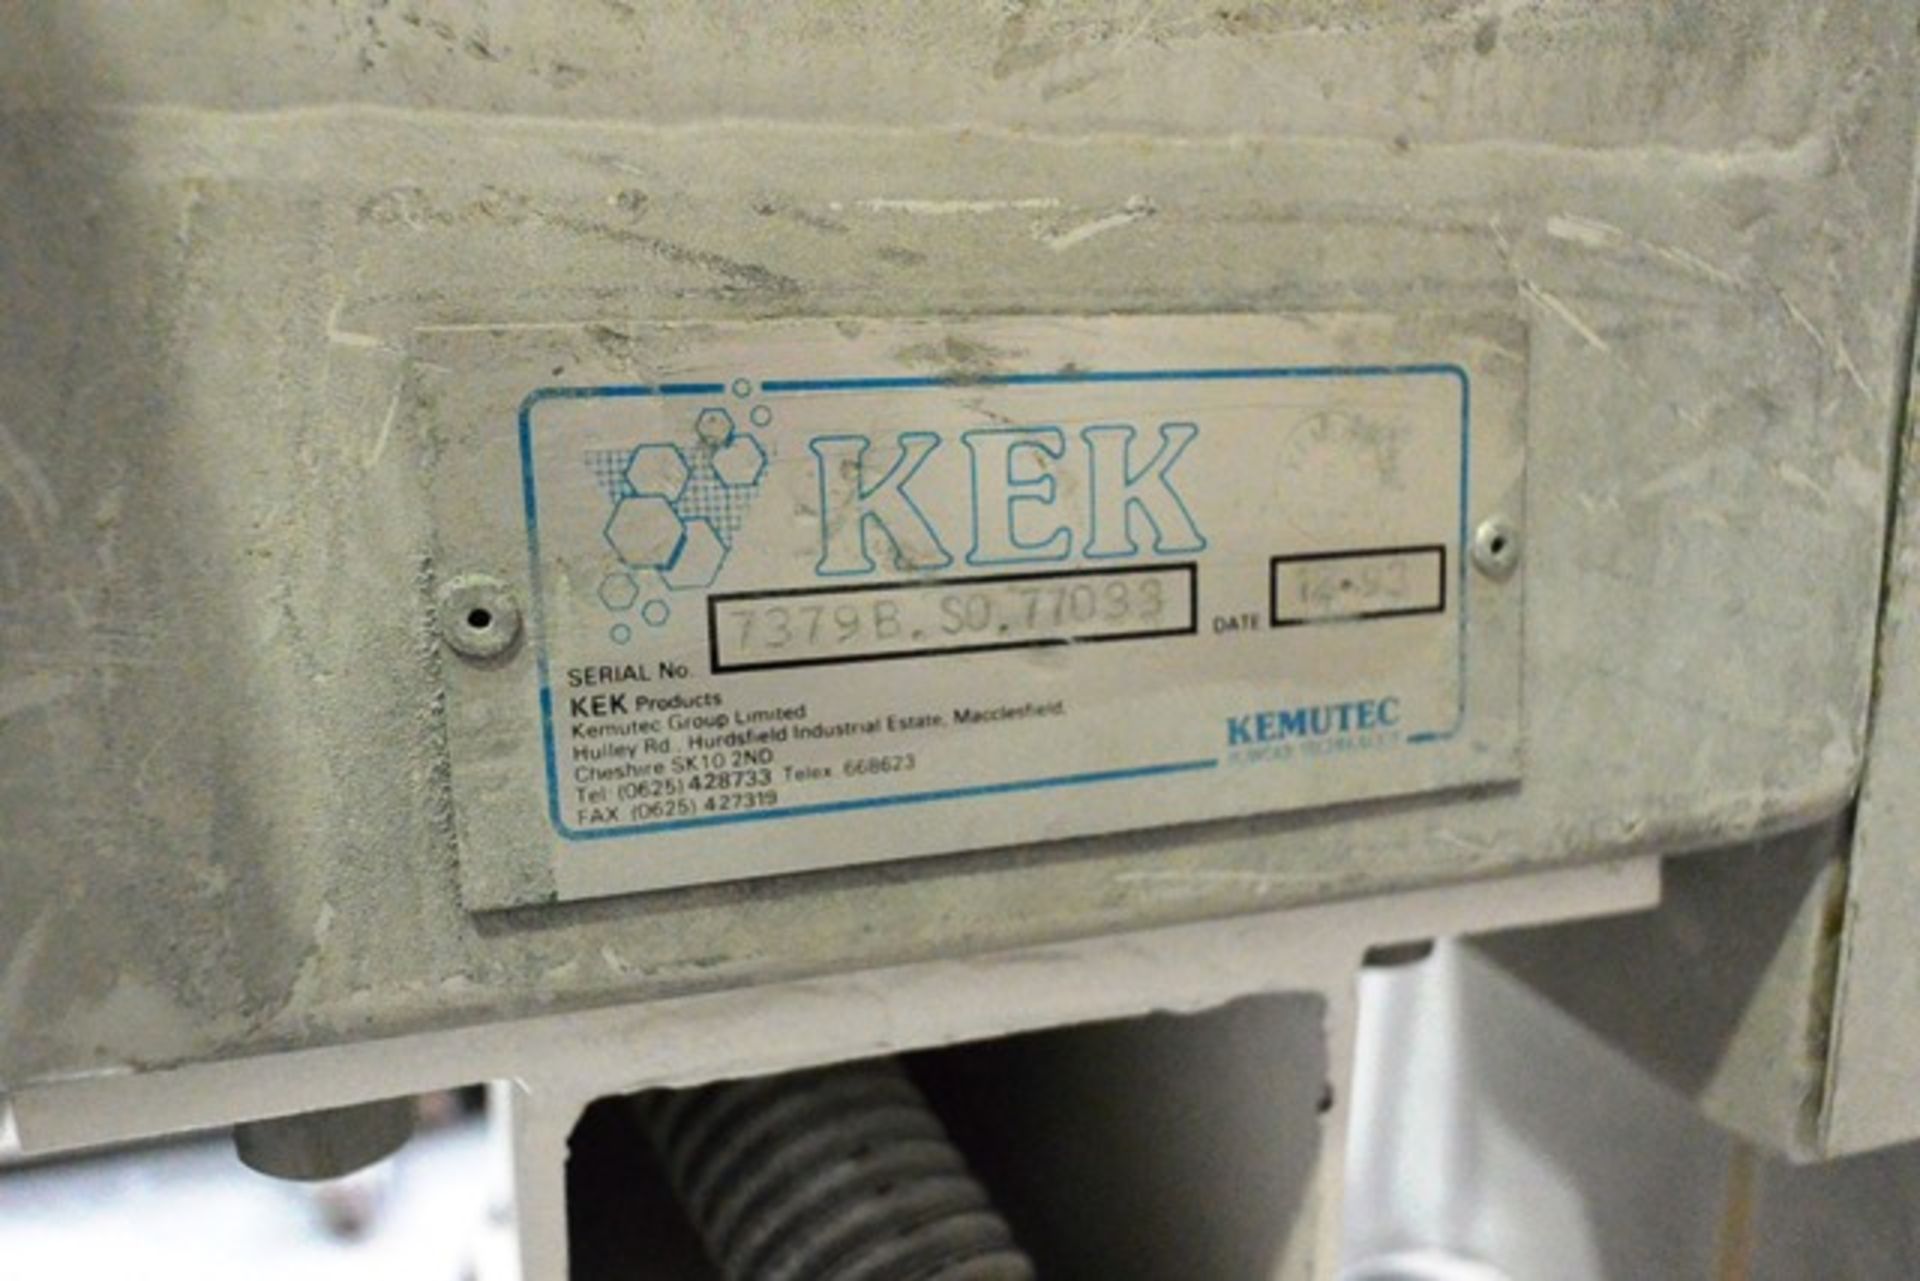 Kek mobile pneumatic powder sifting unit, serial no: 737913 SO 77033 (1993). - Bild 2 aus 2